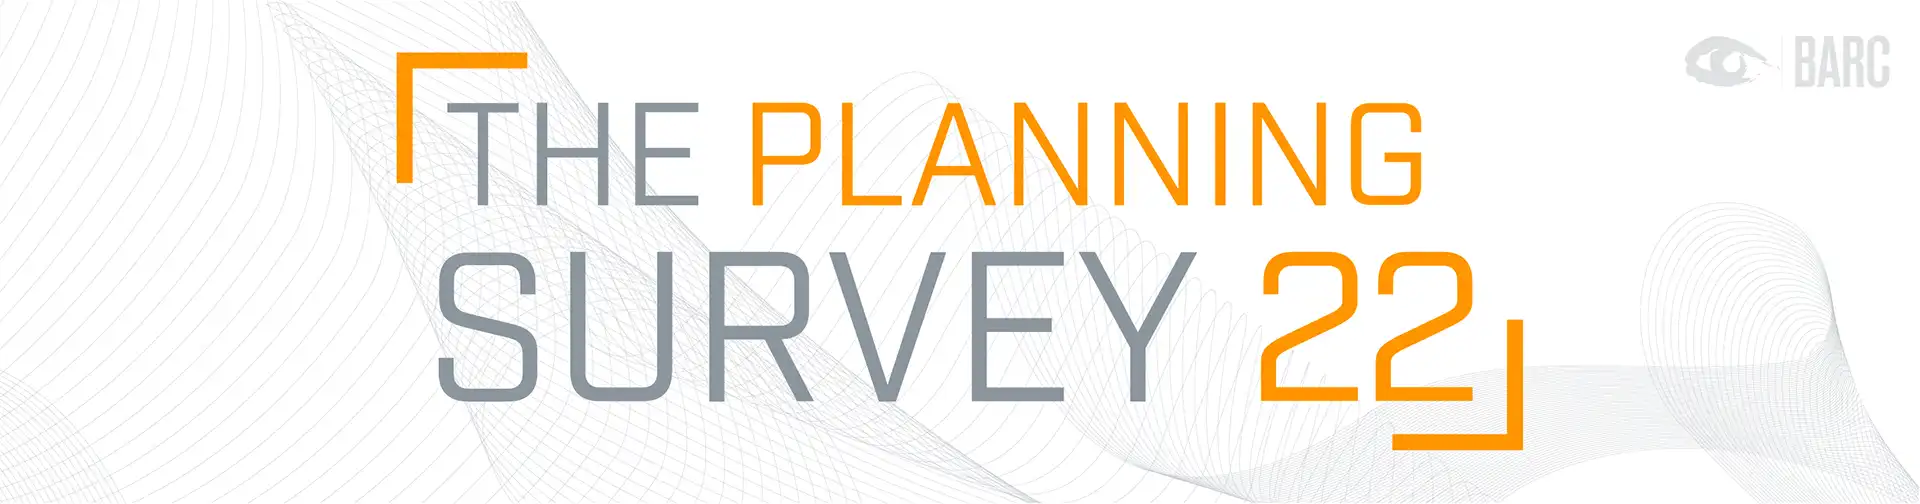 Planning Survey 2022